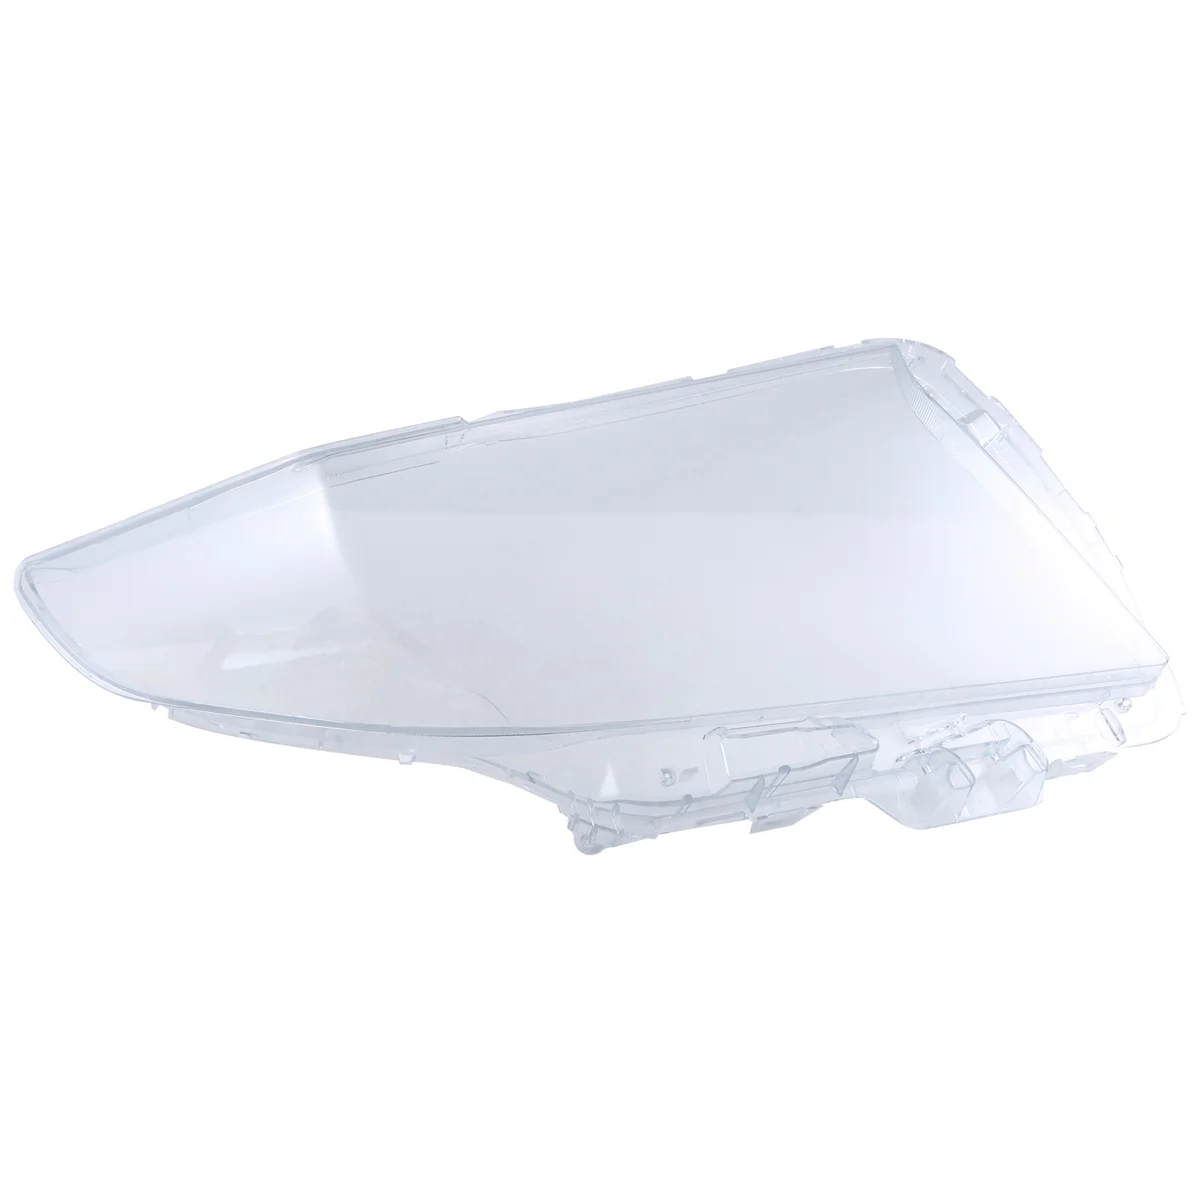 

Right Car Headlight Lens Cover Head Light Lamp Shade Shell Lens Lampshade for Toyota Alphard 2014 2015 2016 2017